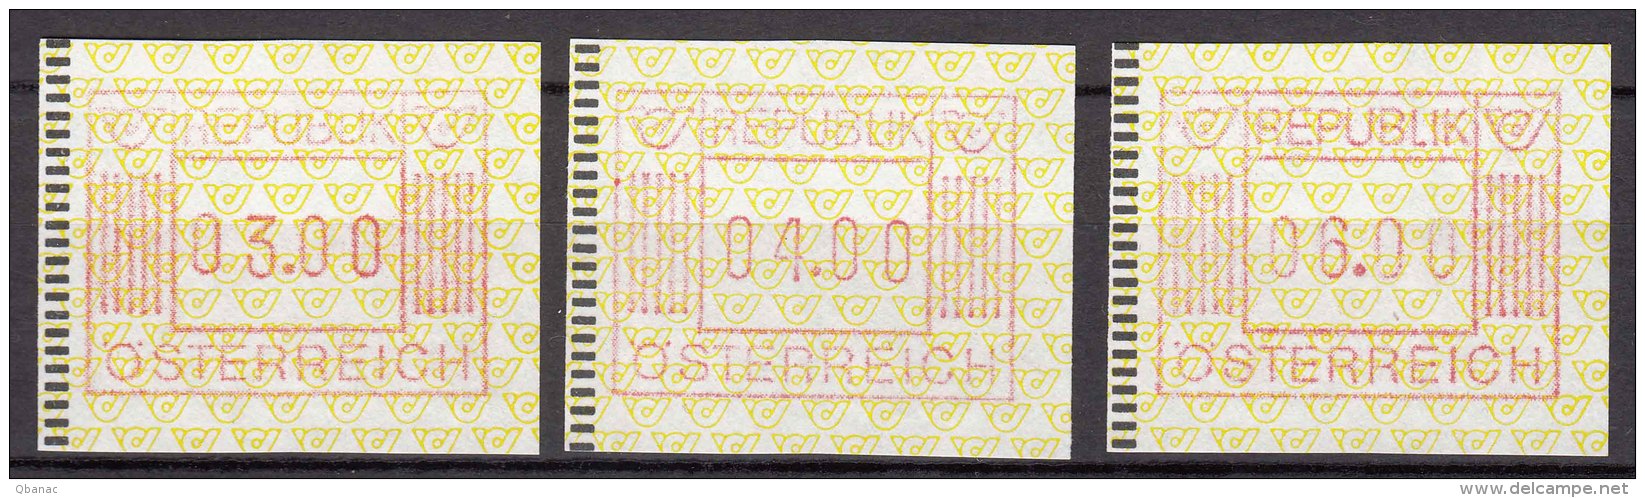 Austria Machine Stamps, Automatmarken 1983 - Máquinas Franqueo (EMA)